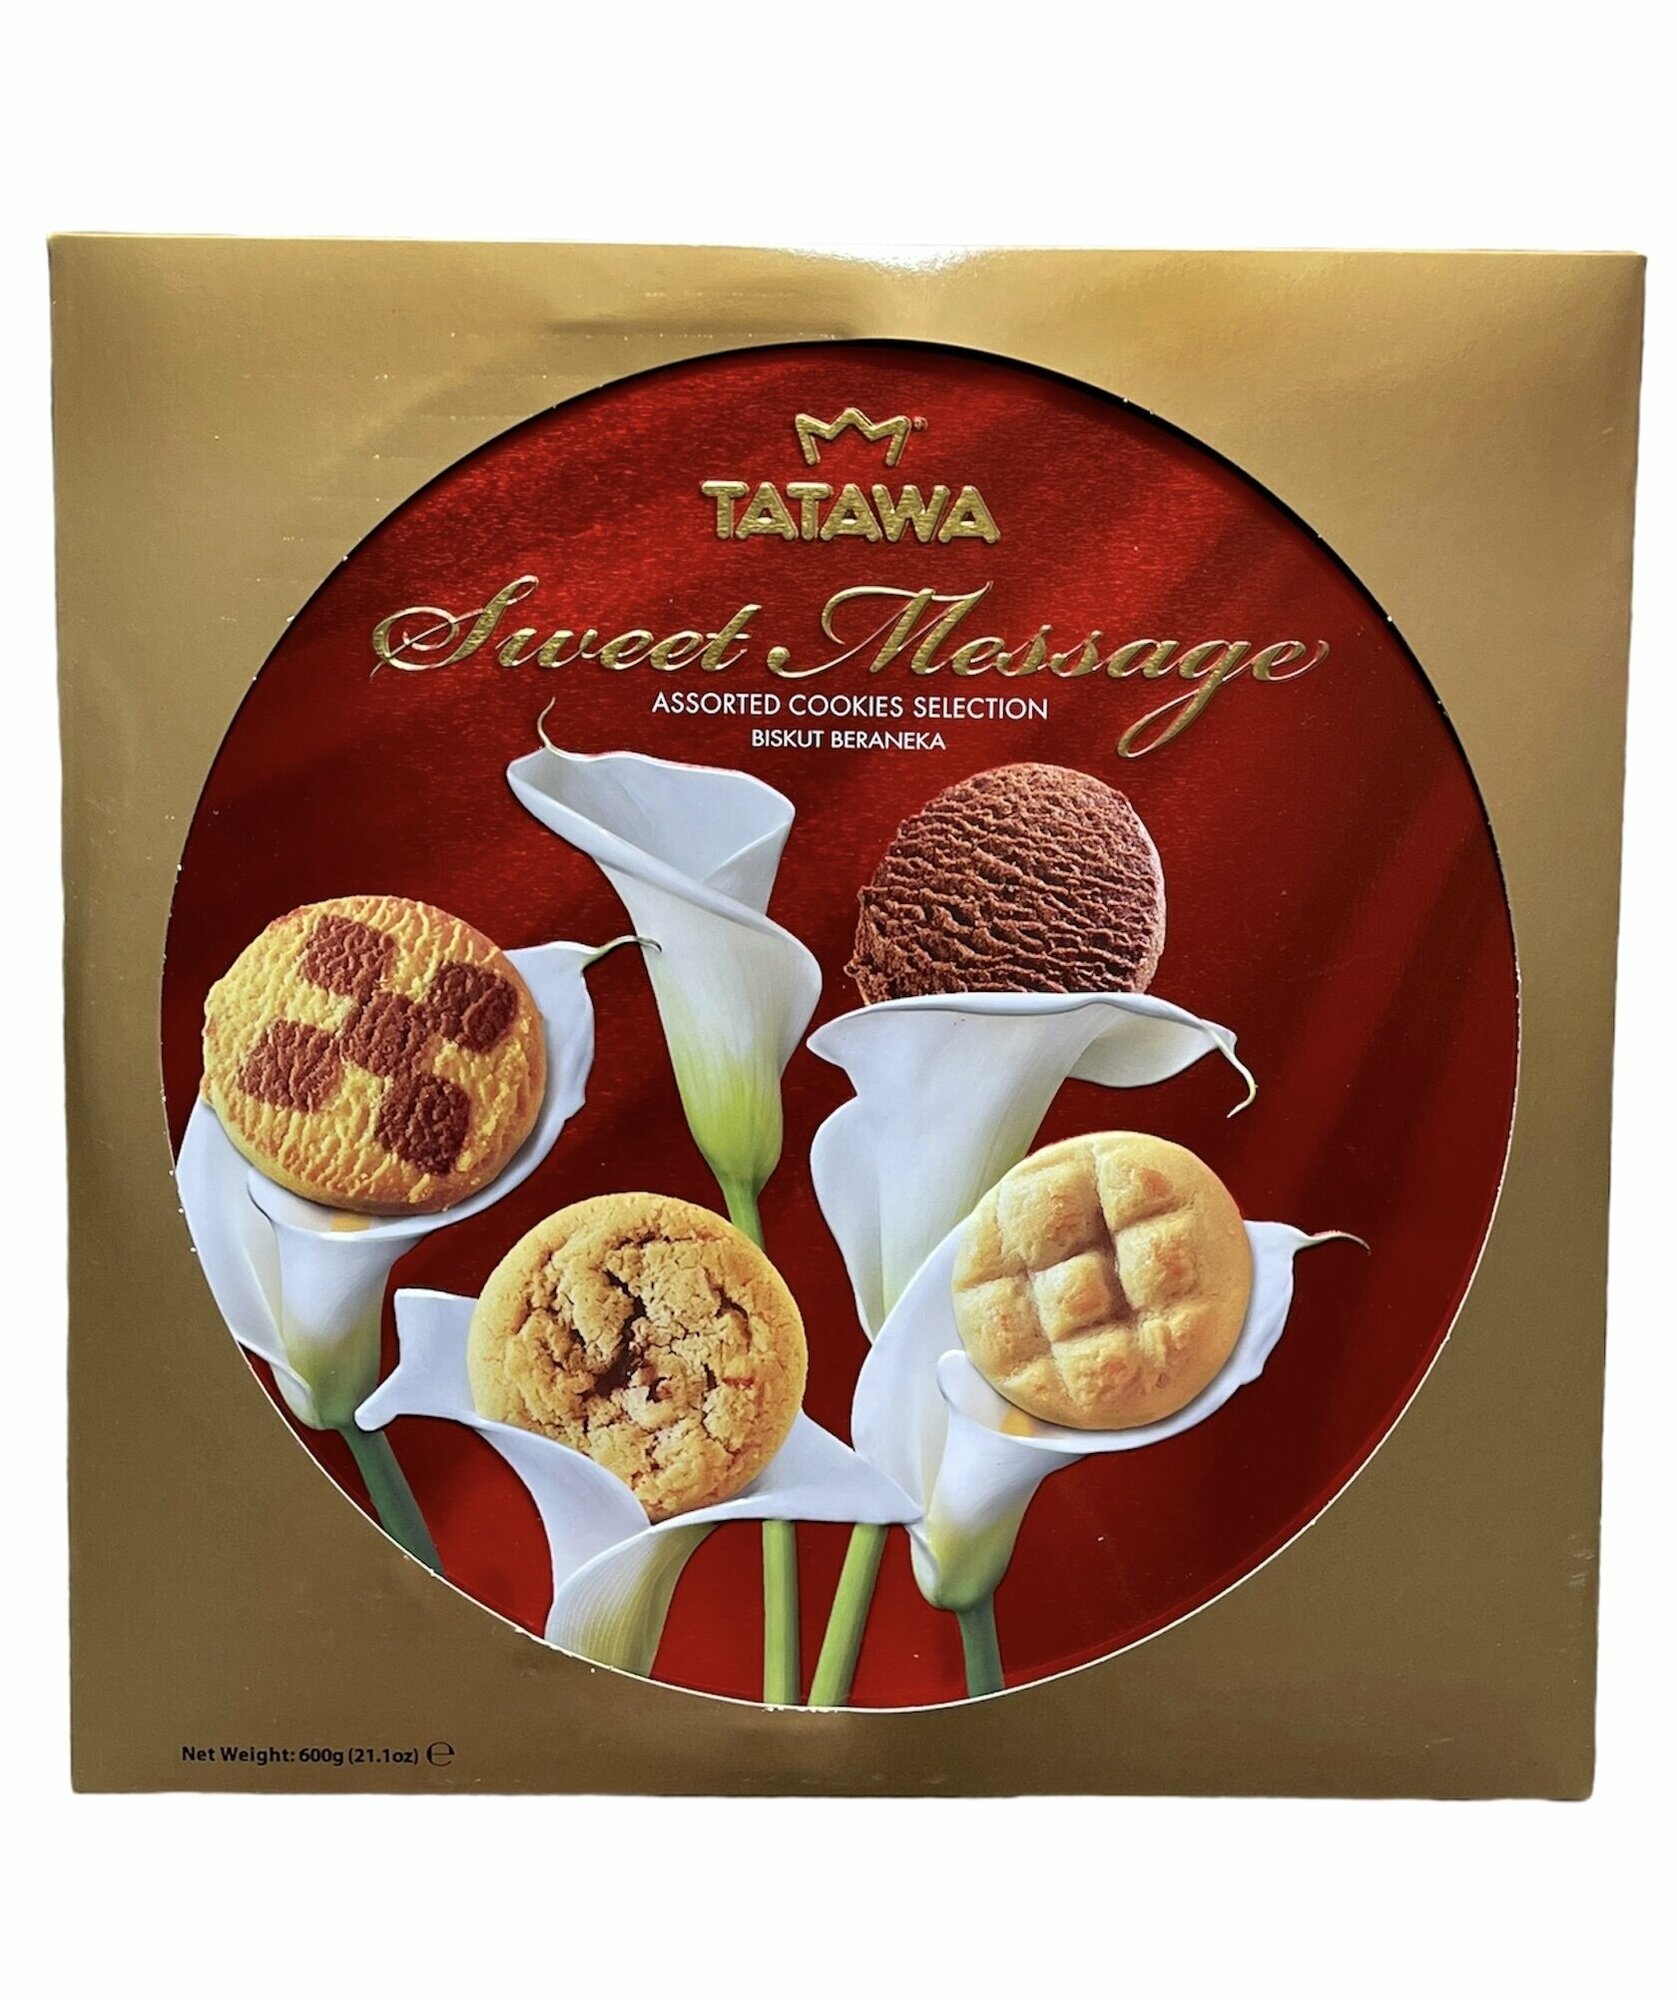 Печенье Tatawa "Sweet Message" ассорти 600г ж/б (Малайзия) - фотография № 3